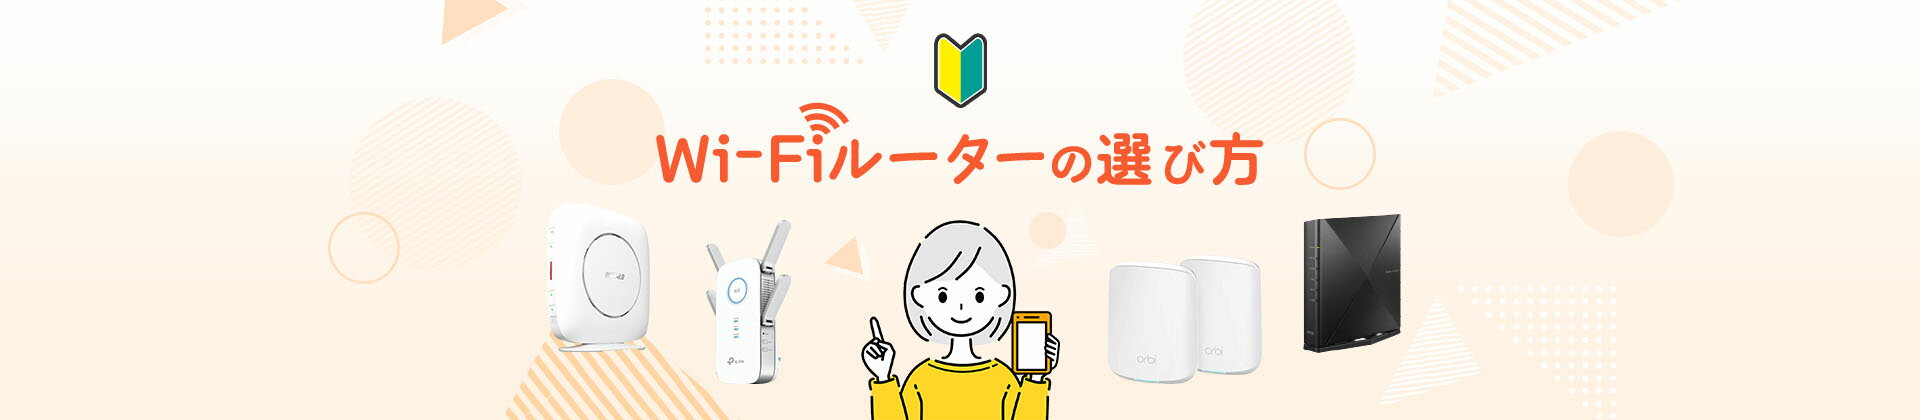 Wi-Fi選び方ガイド